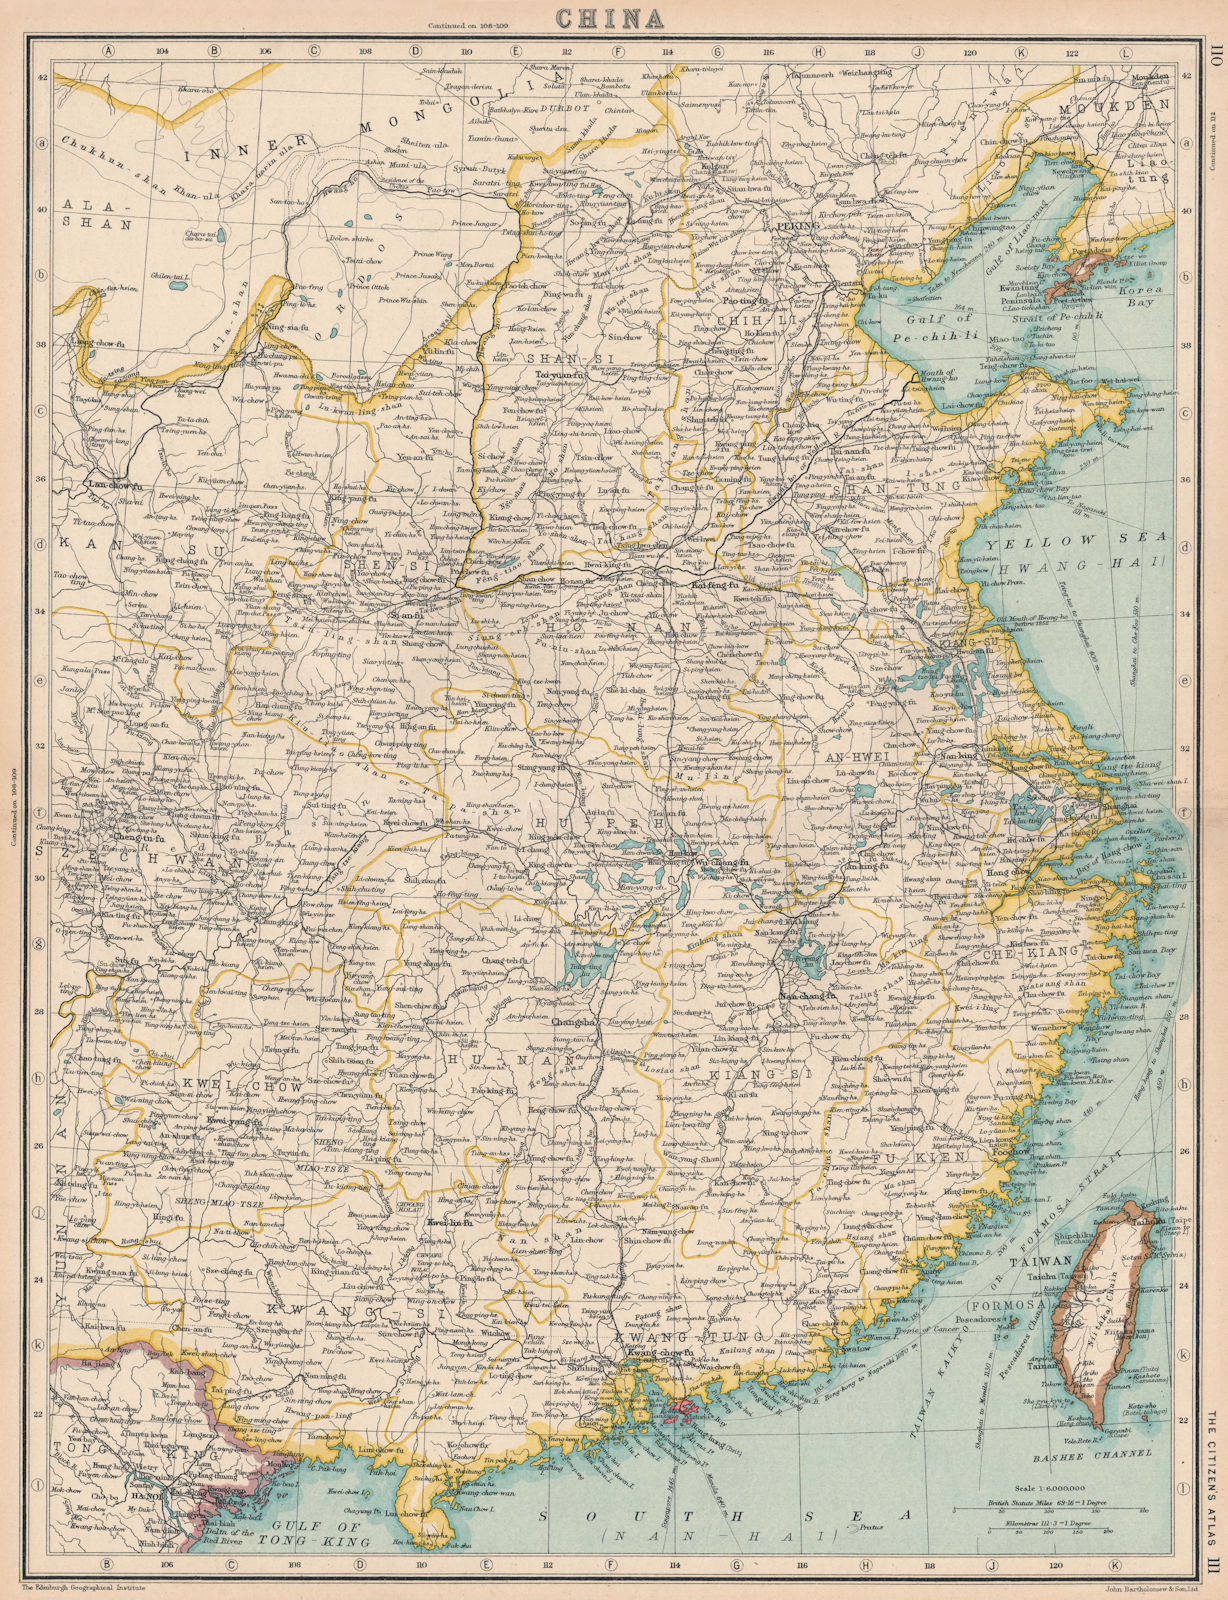 CHINA. Port Arthur (Ryojun) Formosa Taiwan as Japanese. BARTHOLOMEW 1924 map